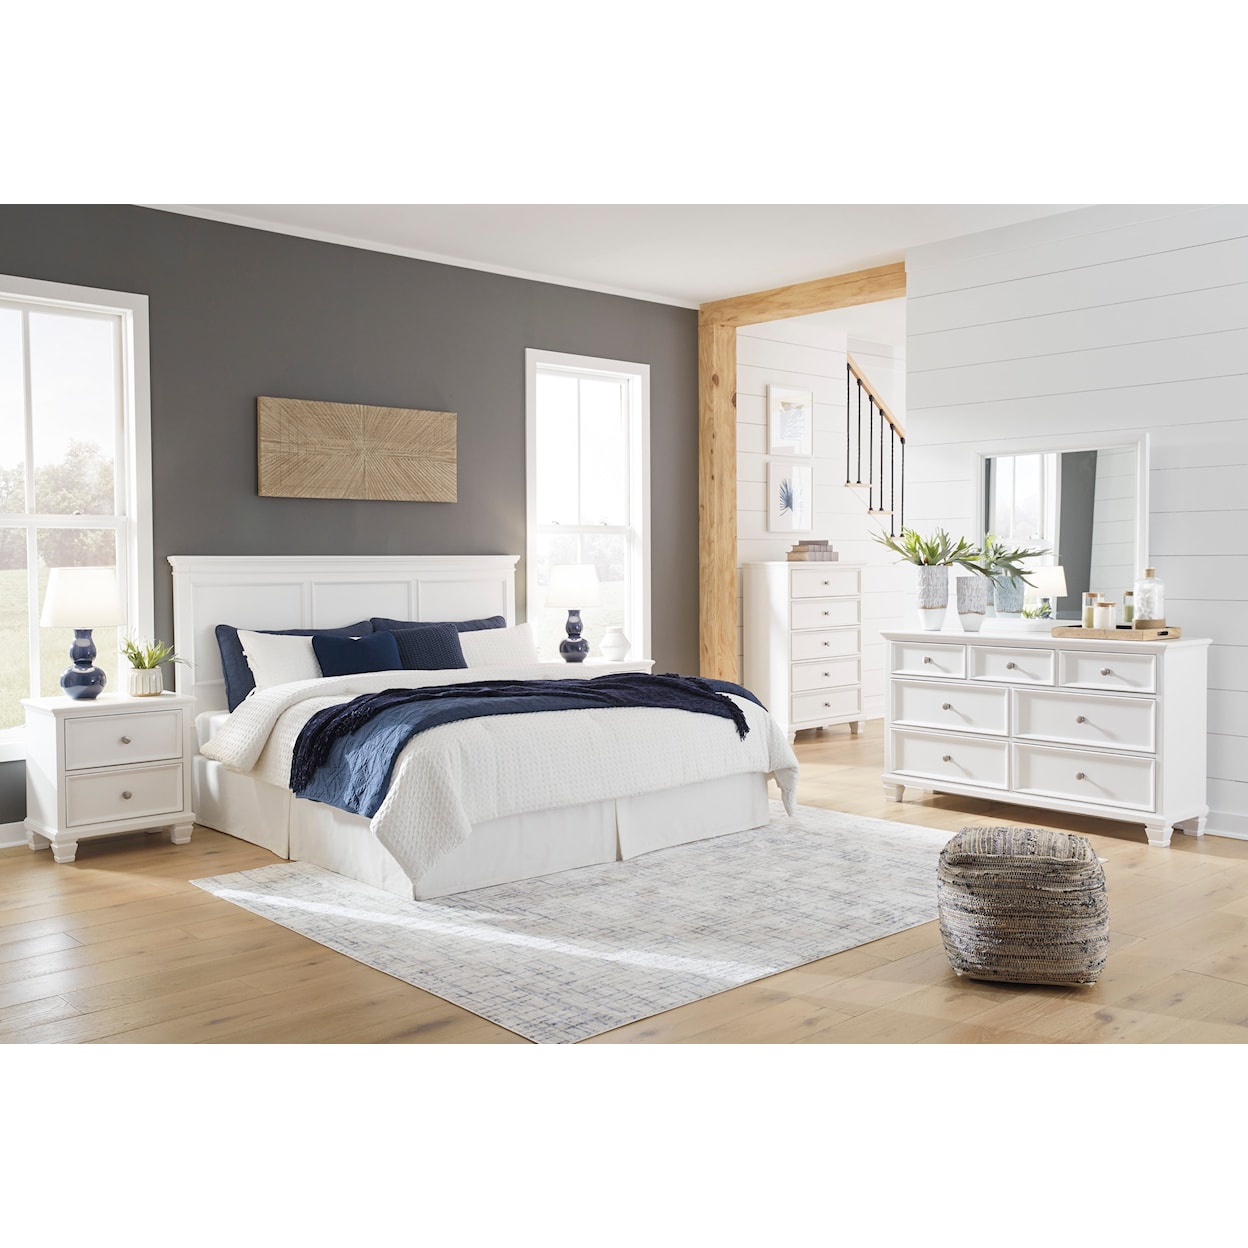 Ashley Furniture Signature Design Fortman Full Bedroom Set